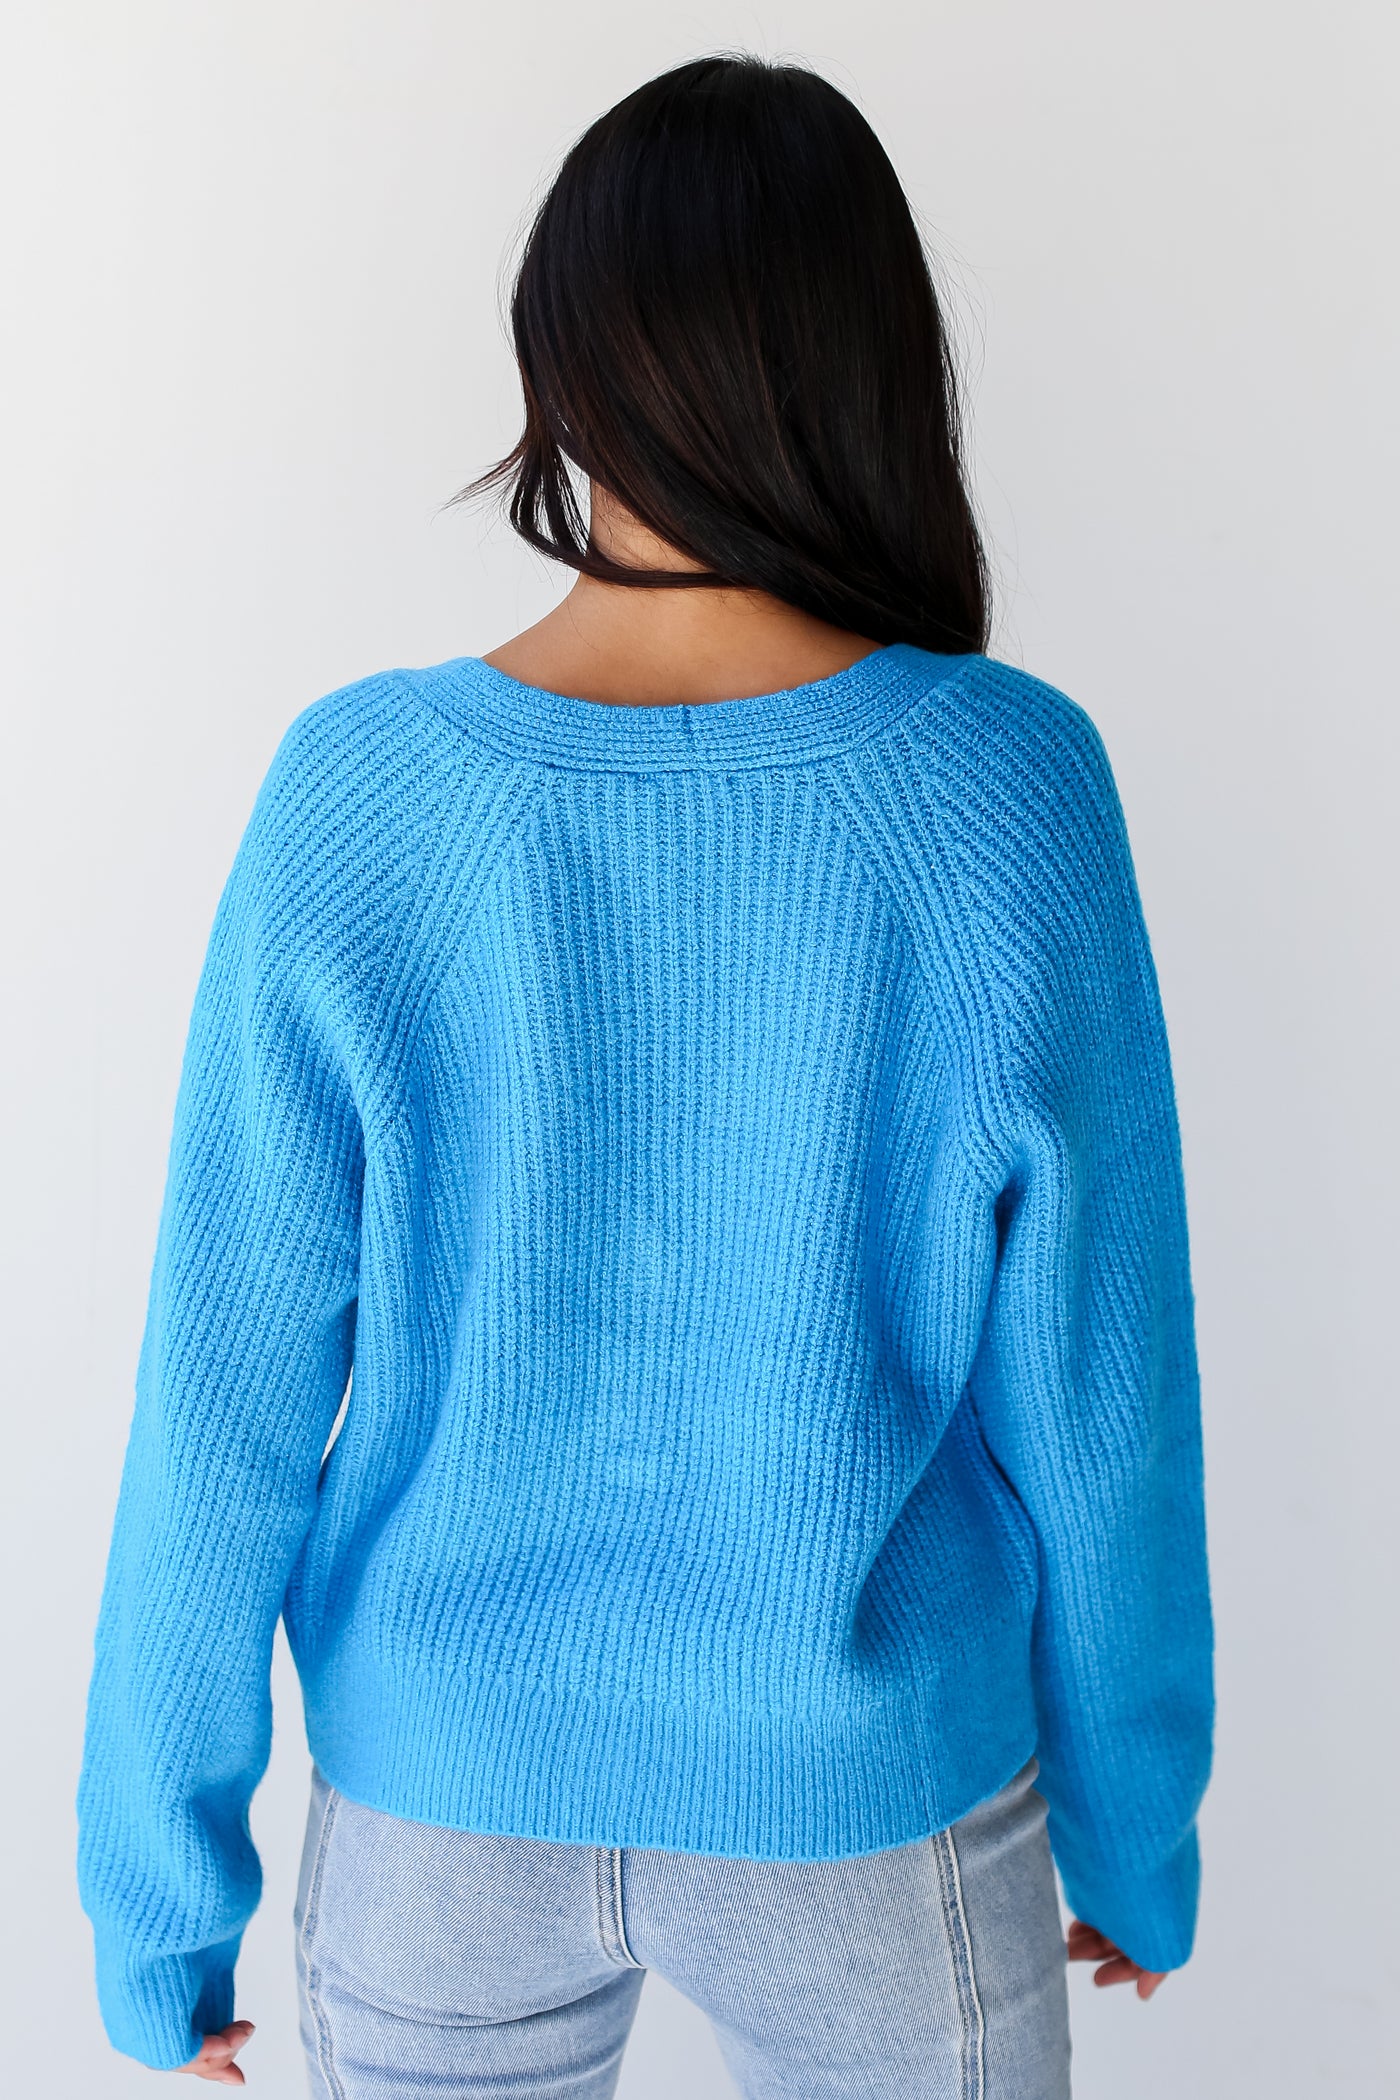 trendy blue sweaters